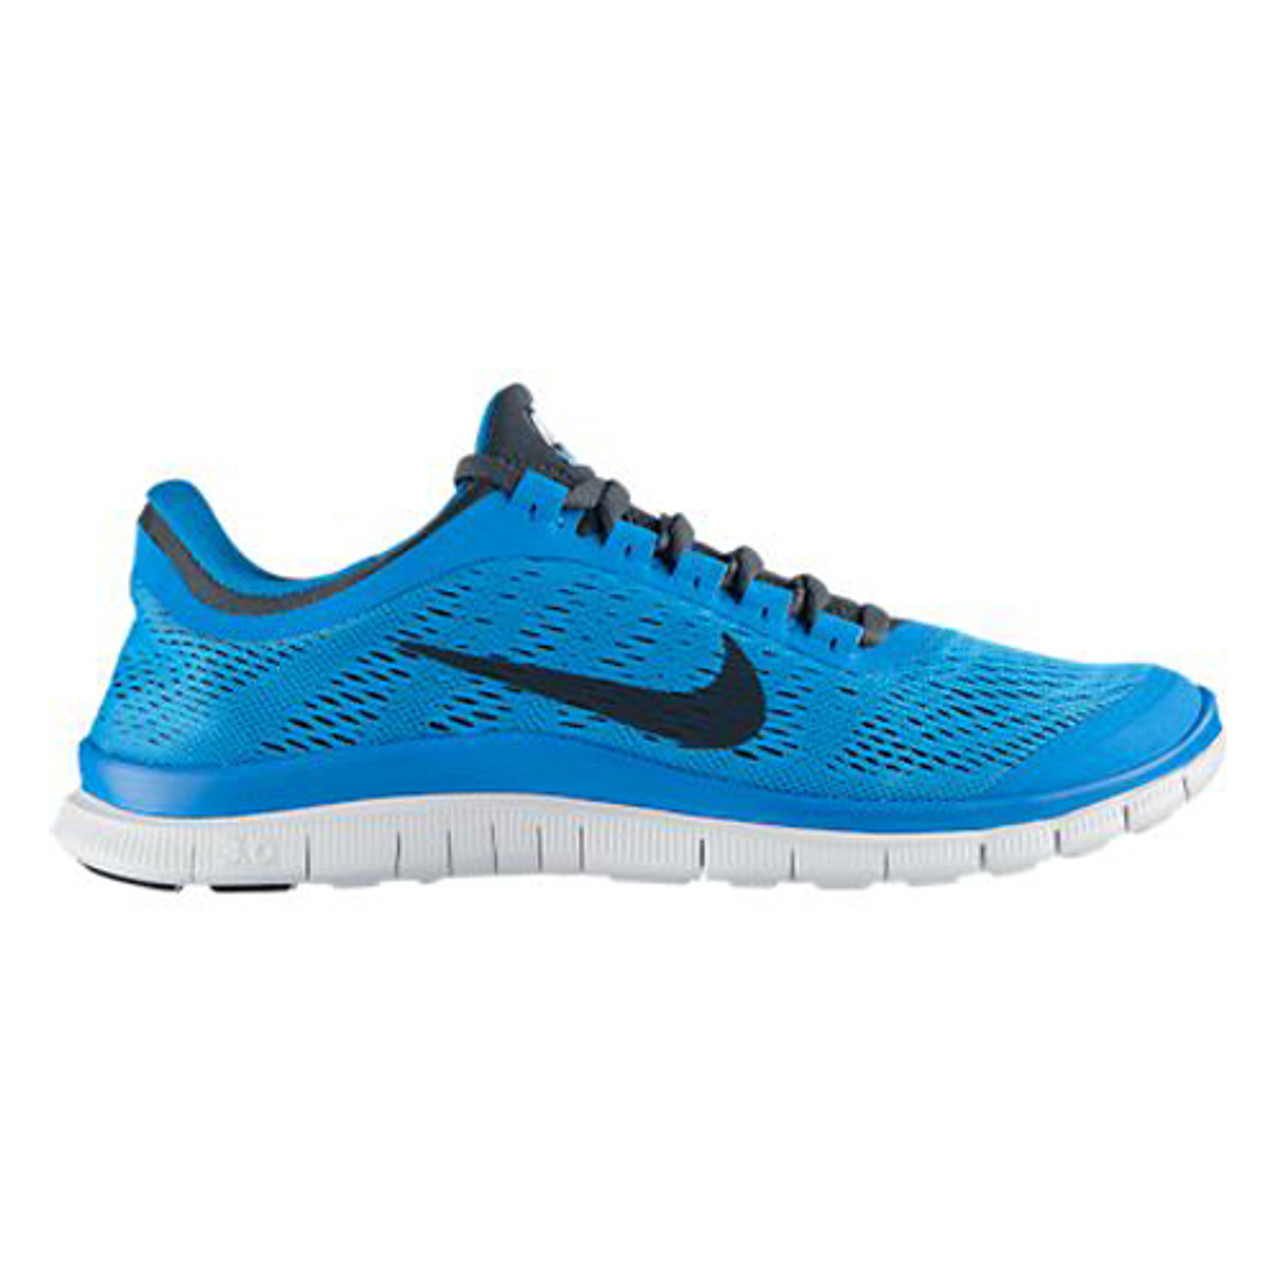 Free 3.0 V5 Blue/Black Mens Running Shoes - | Discount Nike Men's Athletic & More Shoolu.com | Shoolu.com